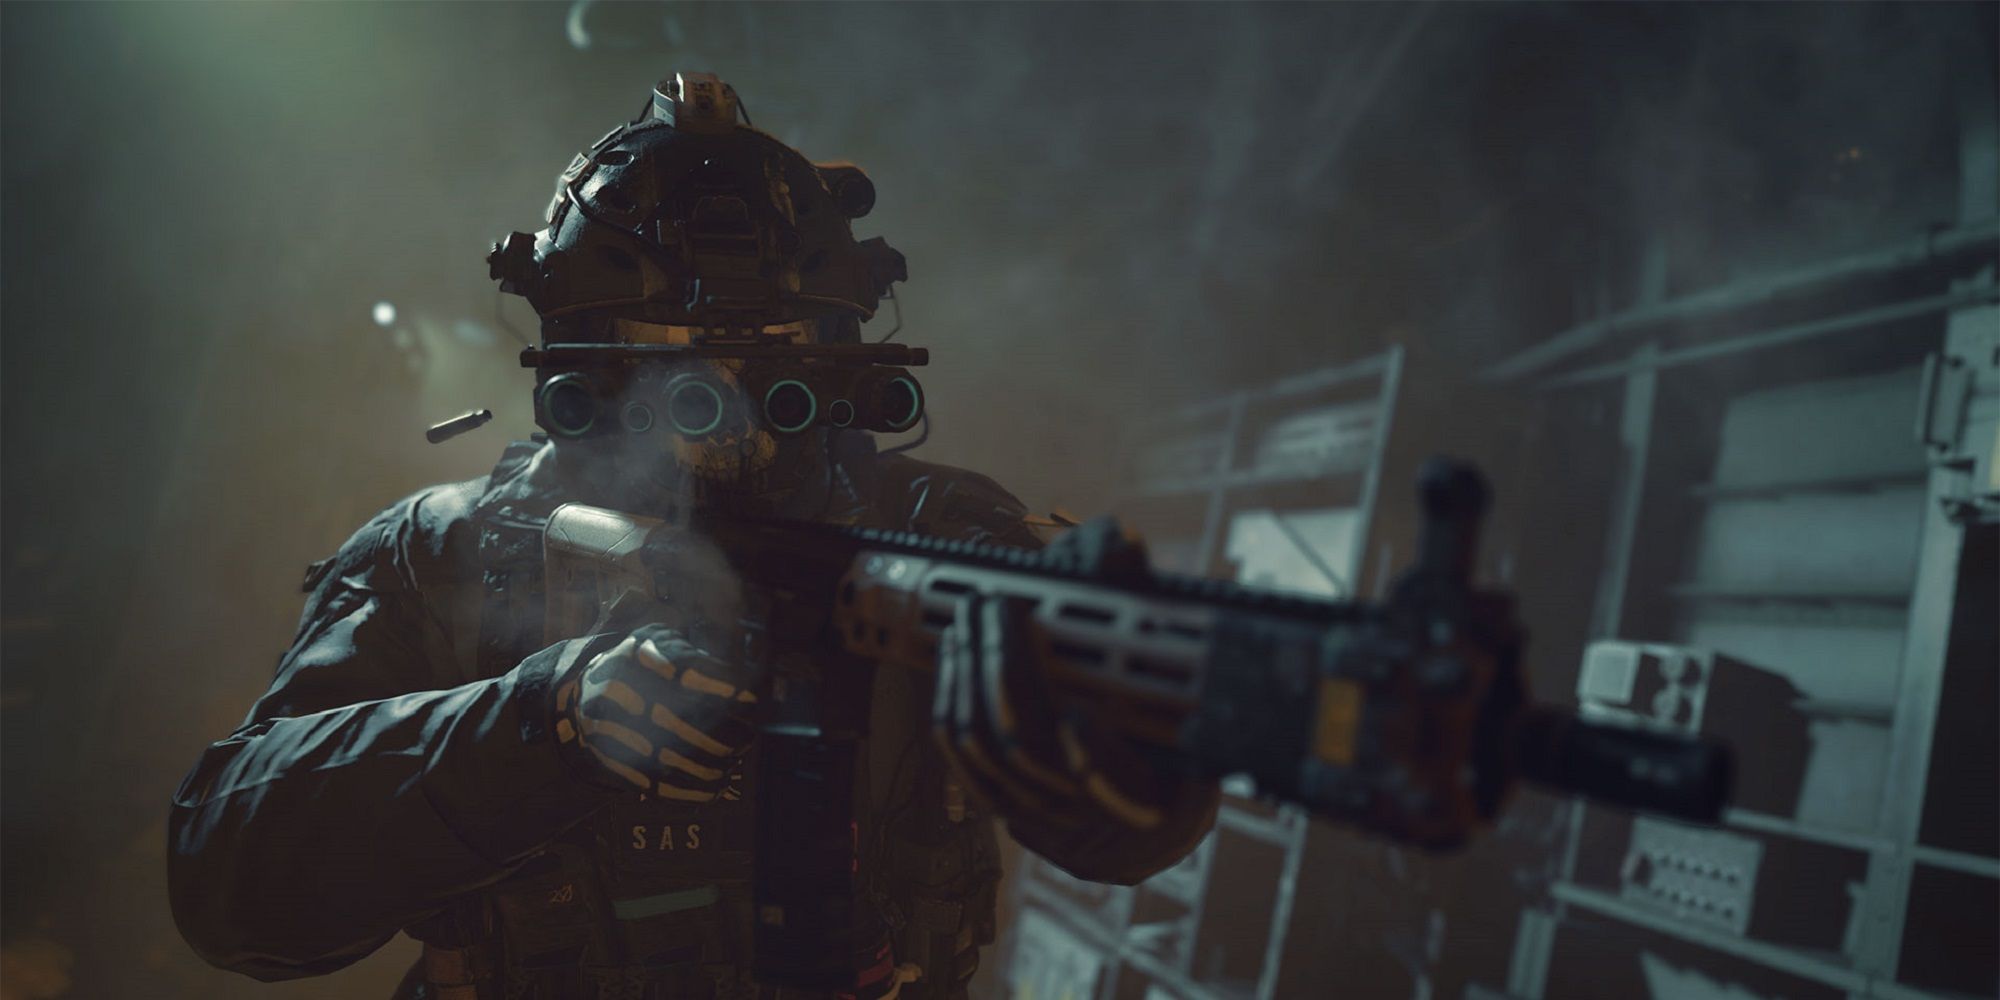 Call of Duty Modern Warfare 2 character Ghost aiming his gun towards enemies